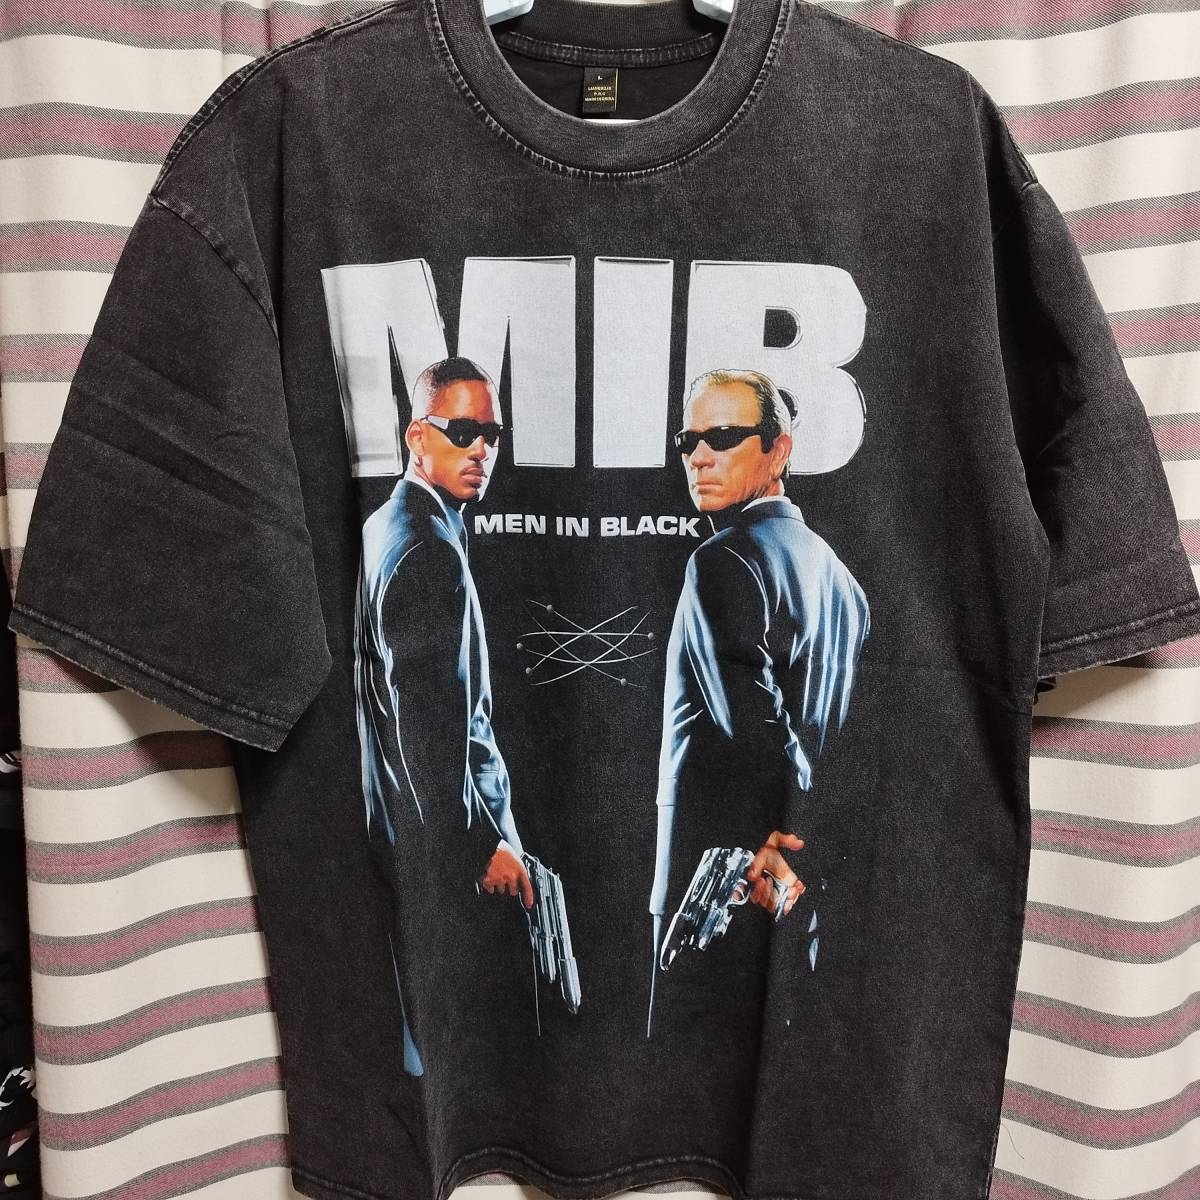 MIB 映画 メンインブラック MEN IN BLACK ビッグプリントTシャツ 厚手 